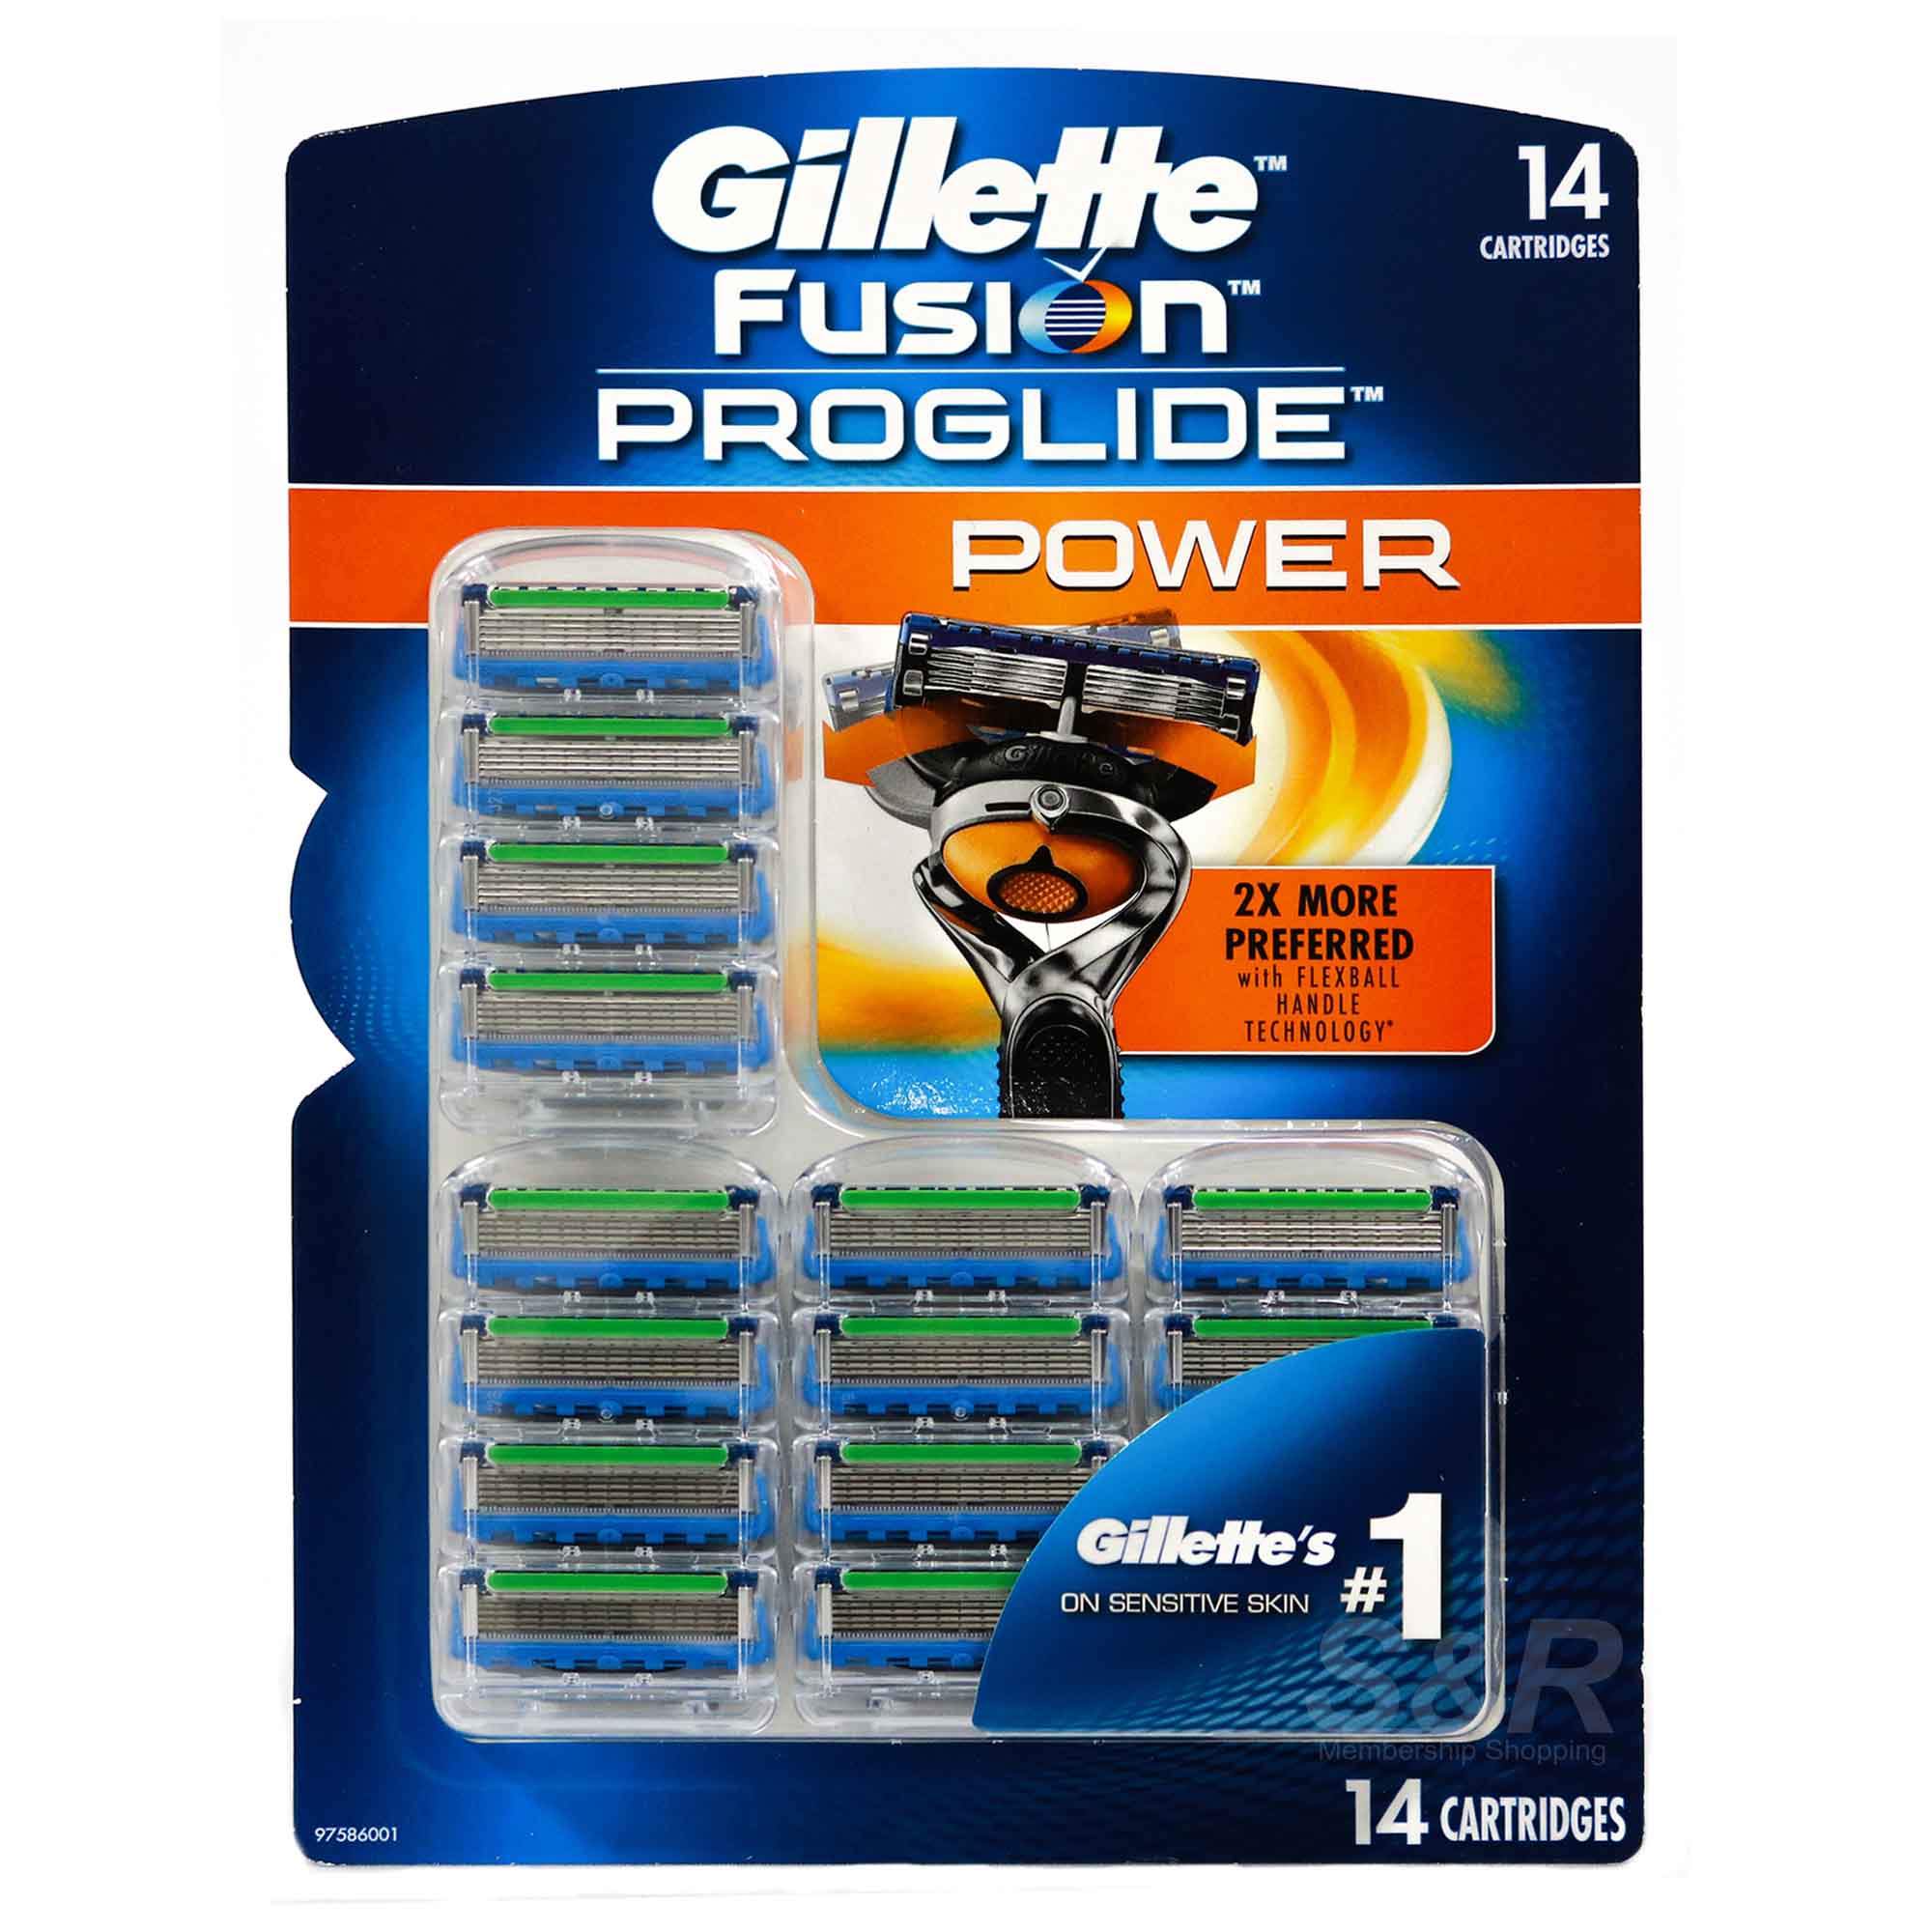 Gillette Fusion Proglide Power 14 cartridges